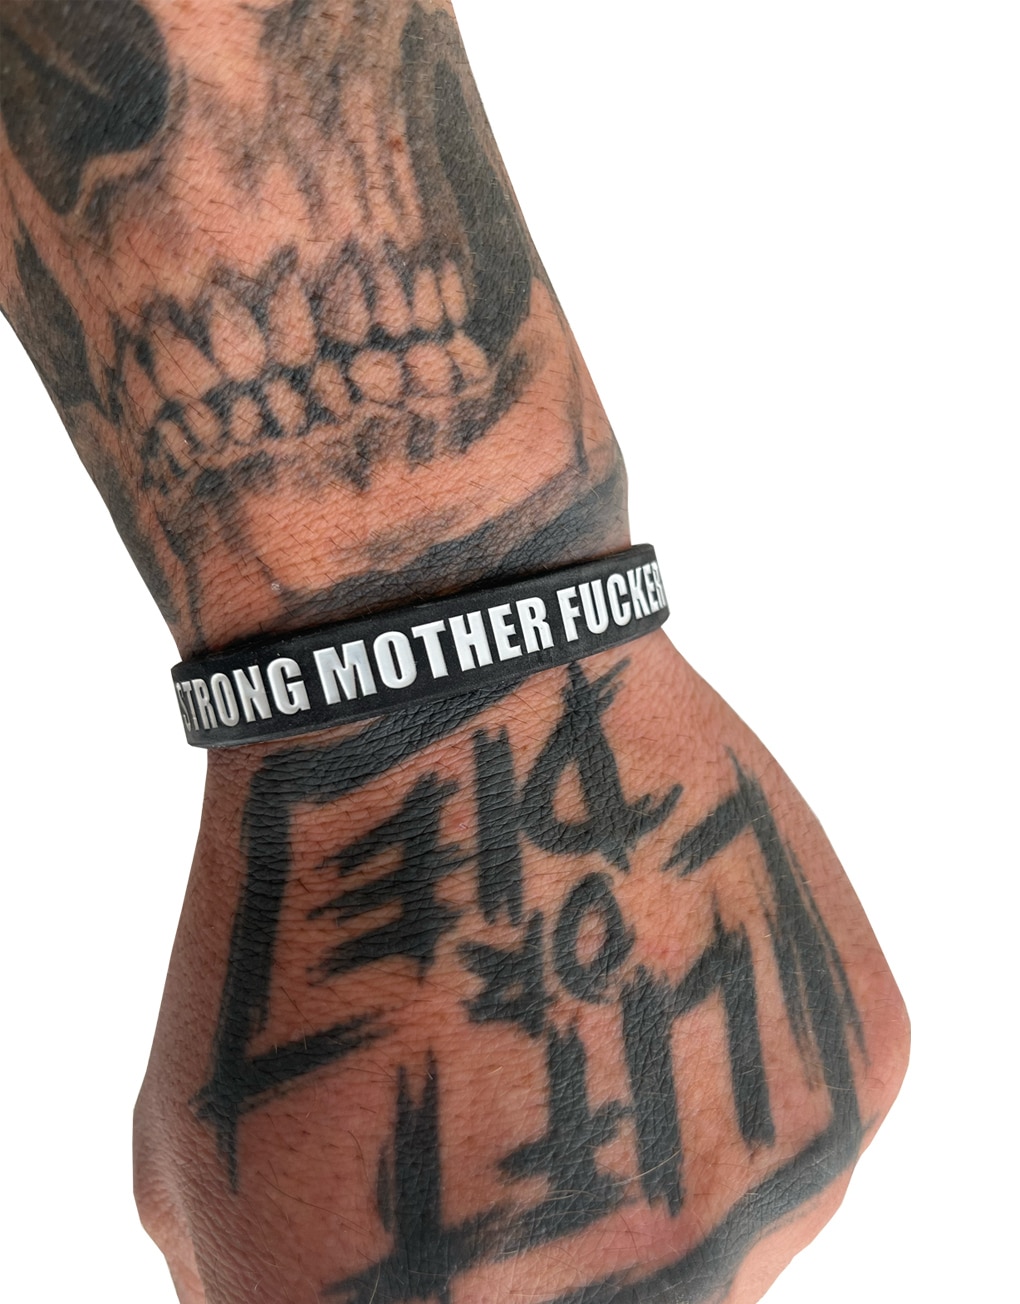 Bracelet Strong Mother Fucker-Lift or Die